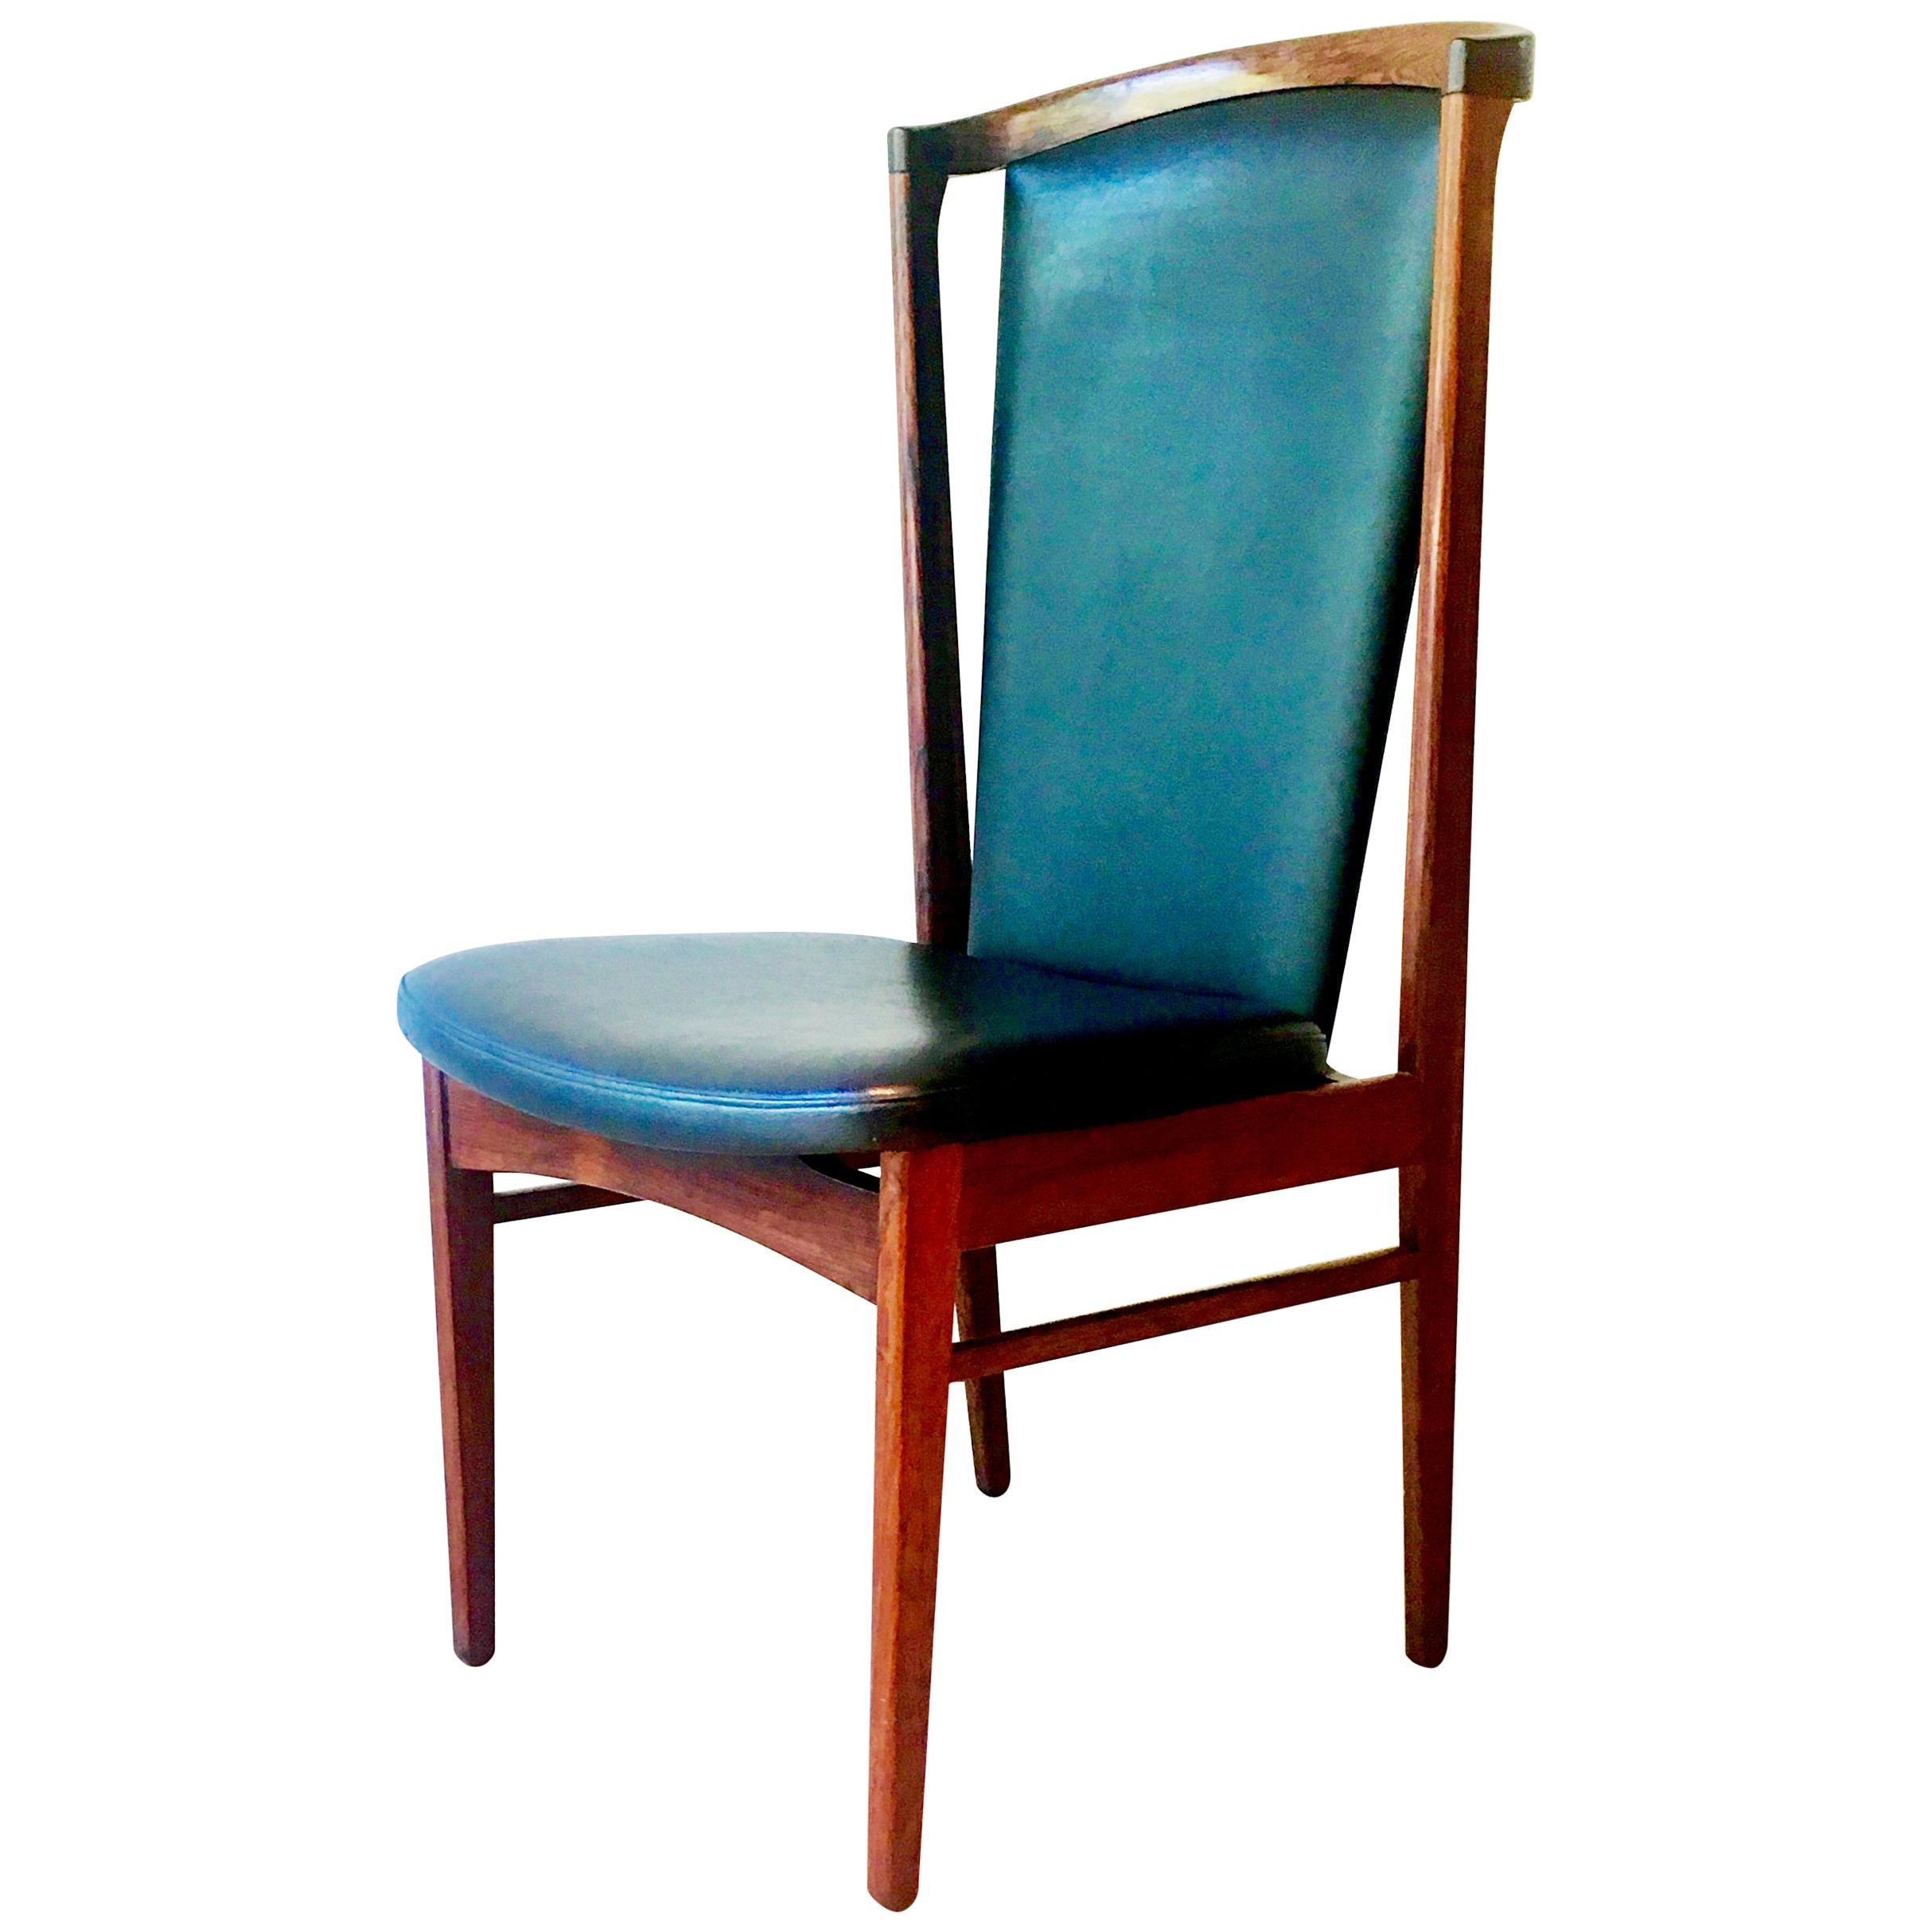 Substantial Danish Eric Buck Designed Desk Chair, 1960s